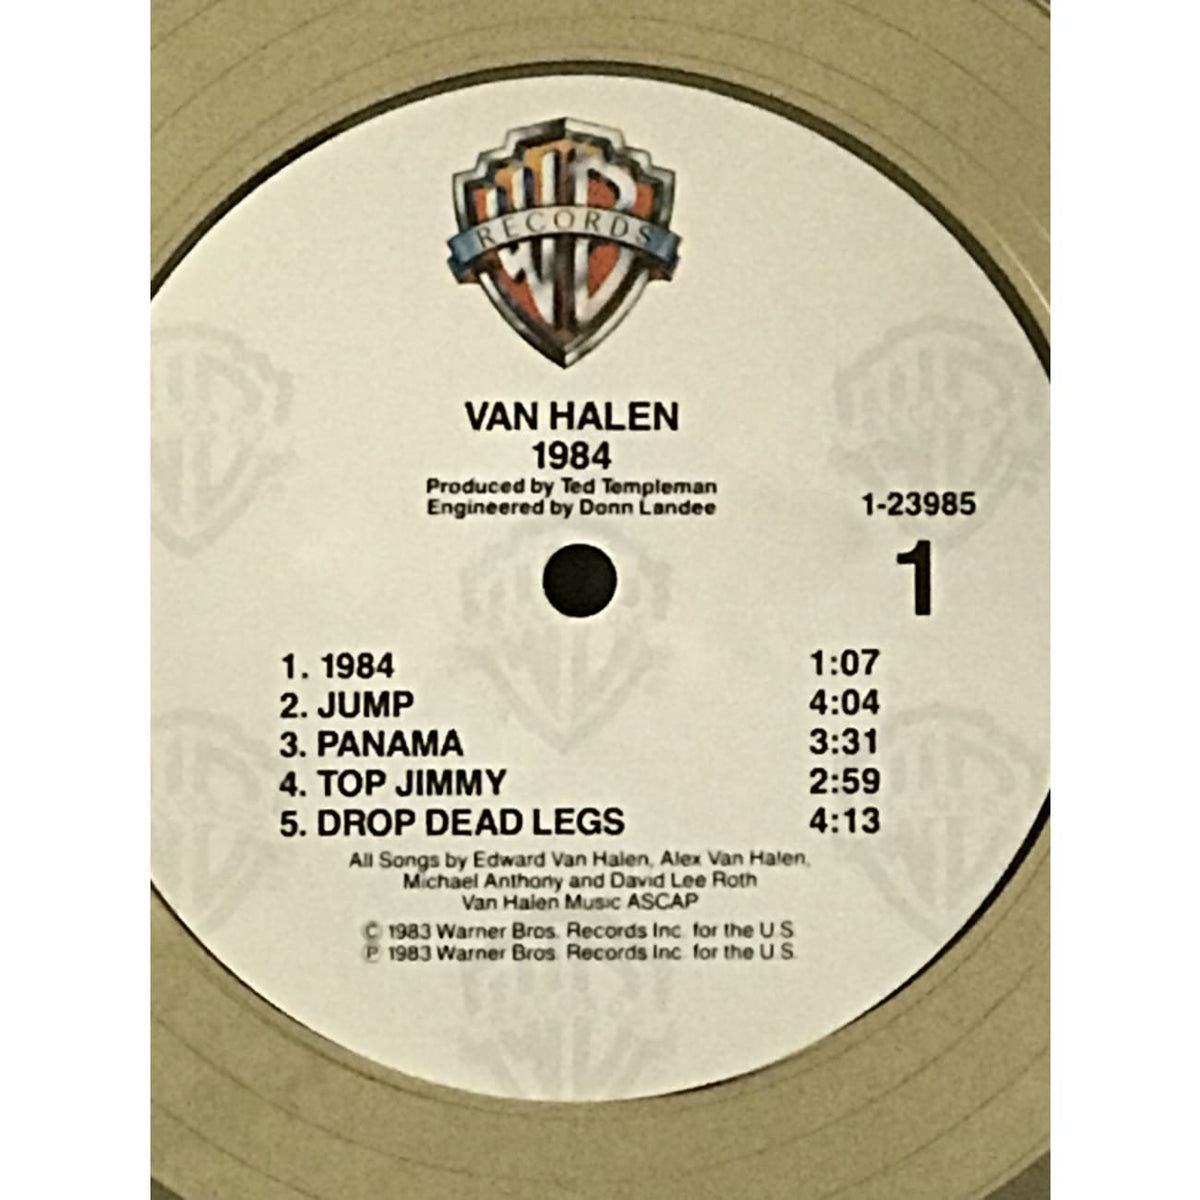 VINILO VAN HALEN 1984